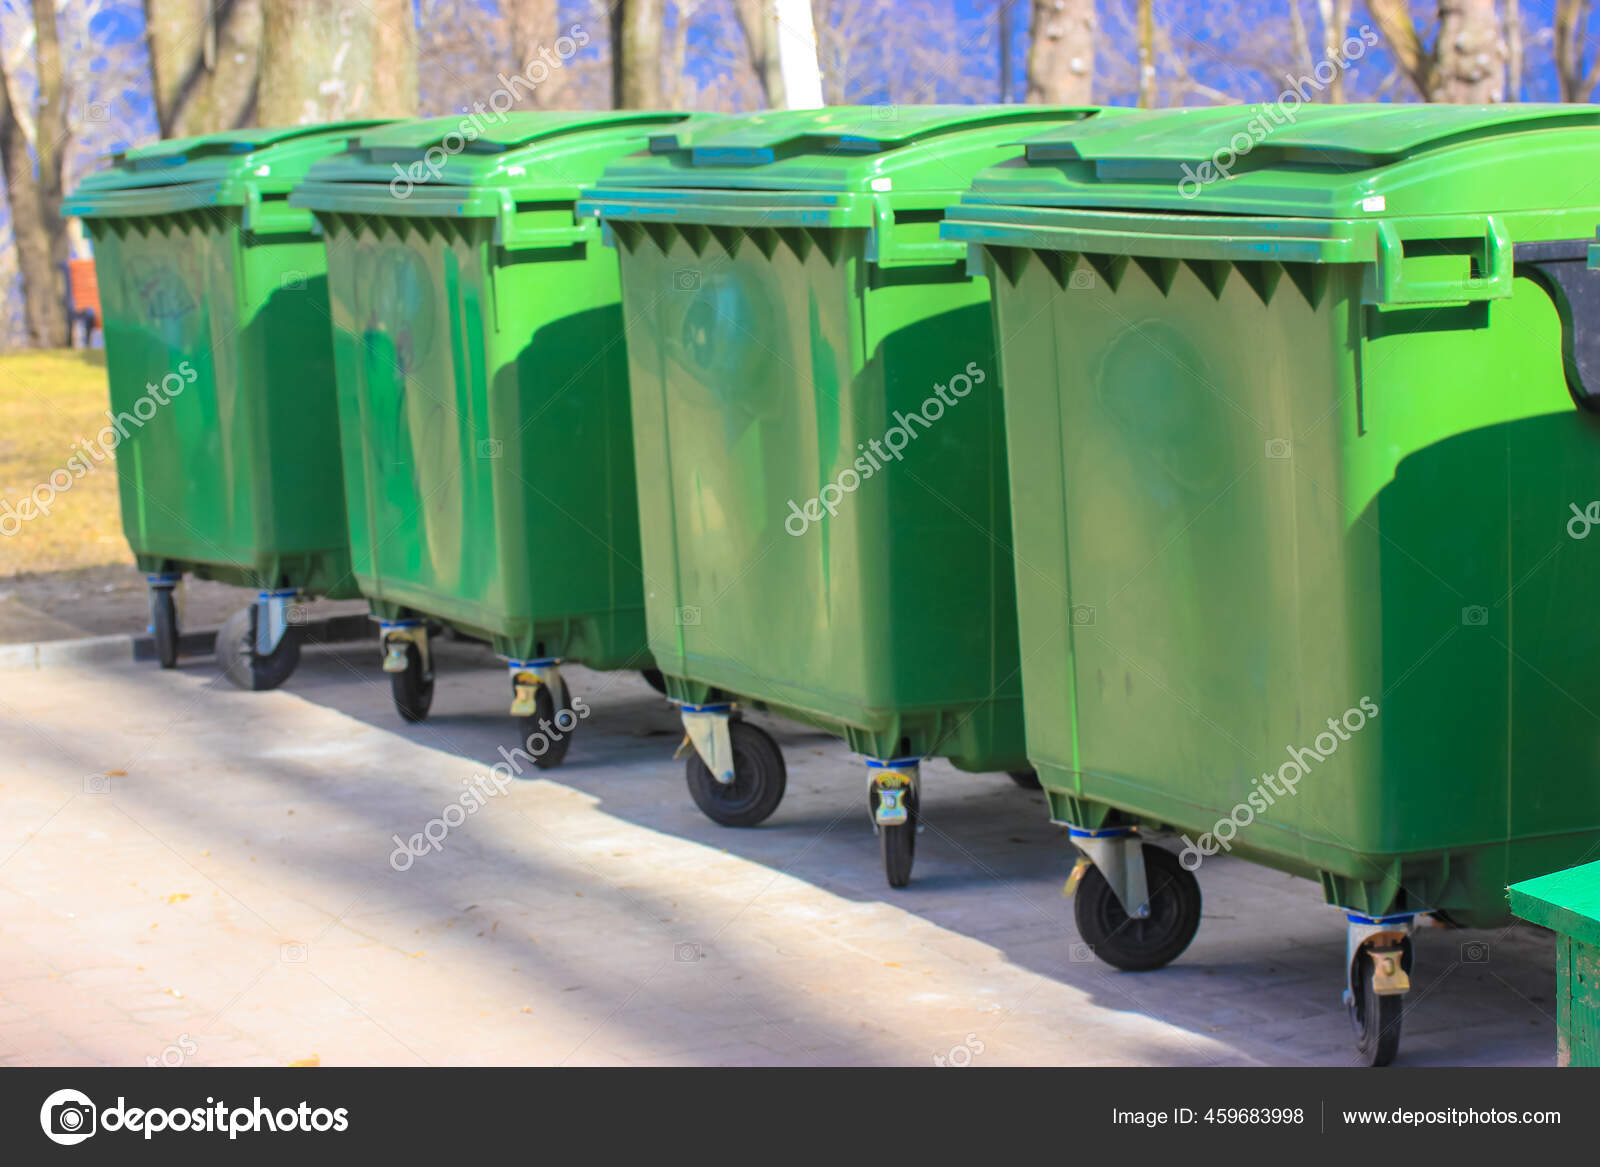 https://st2.depositphotos.com/30884172/45968/i/1600/depositphotos_459683998-stock-photo-large-green-plastic-trash-cans.jpg